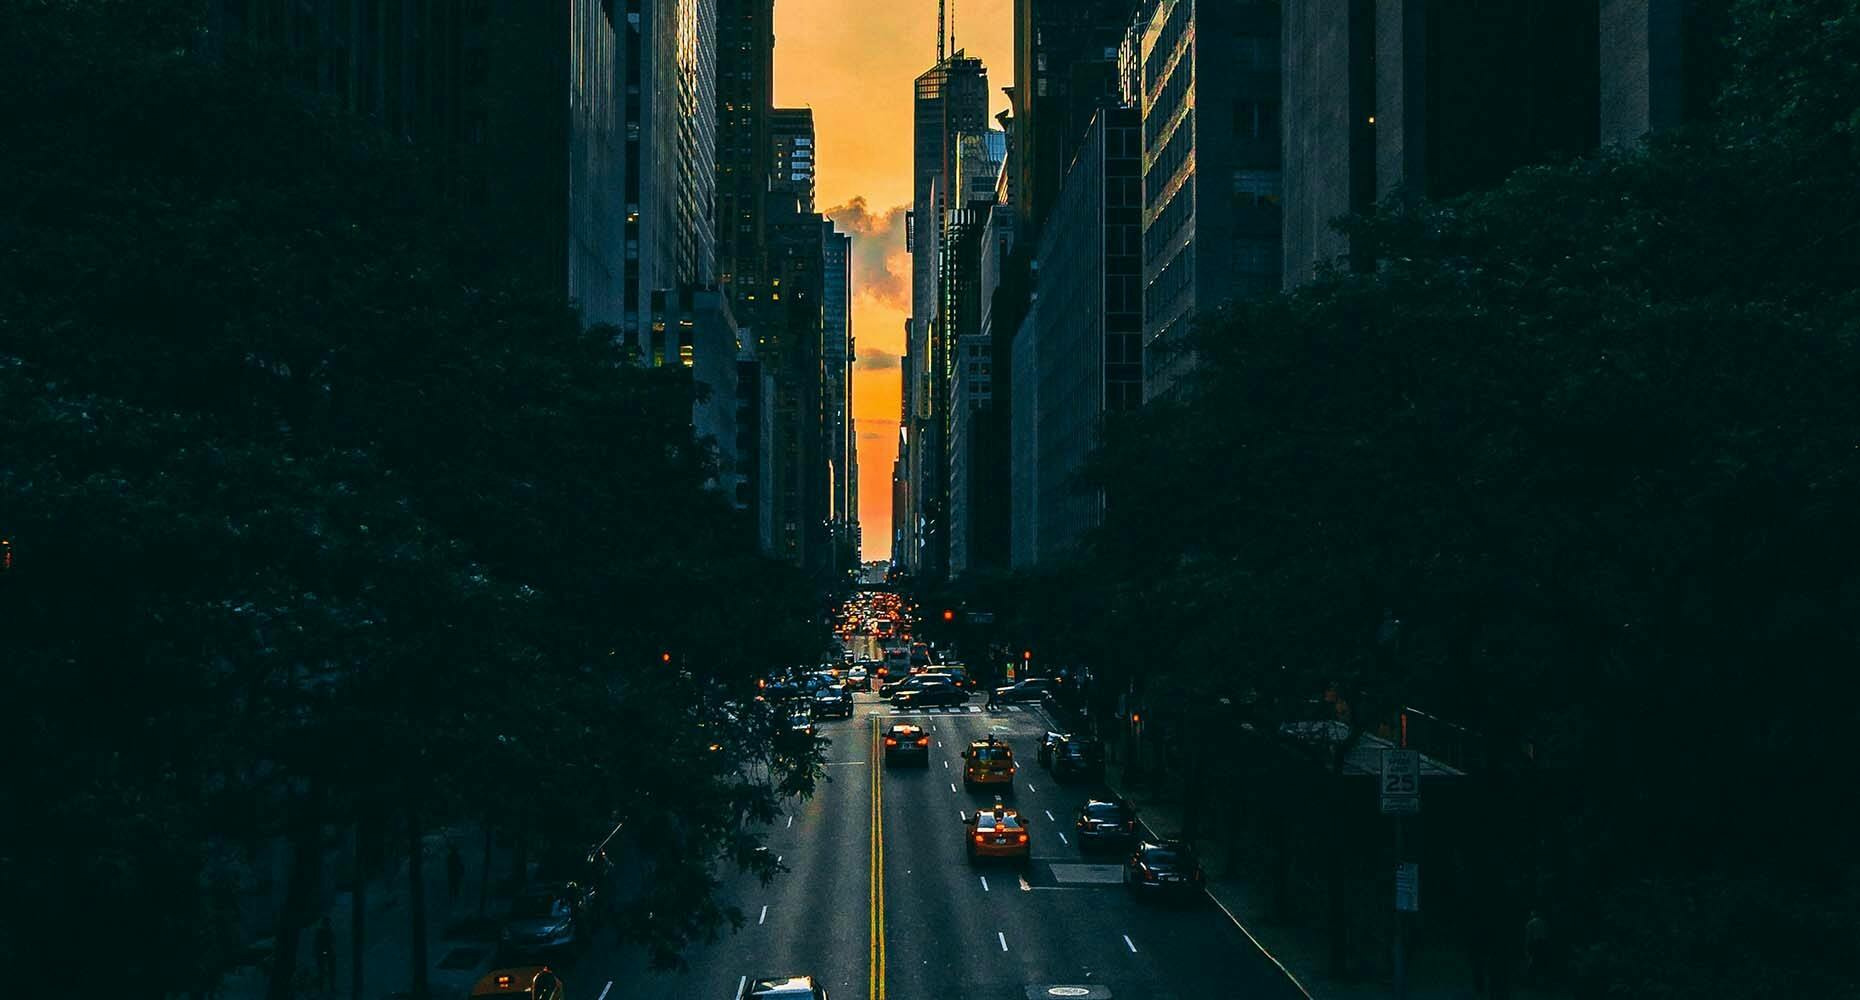 City street running into the sunset